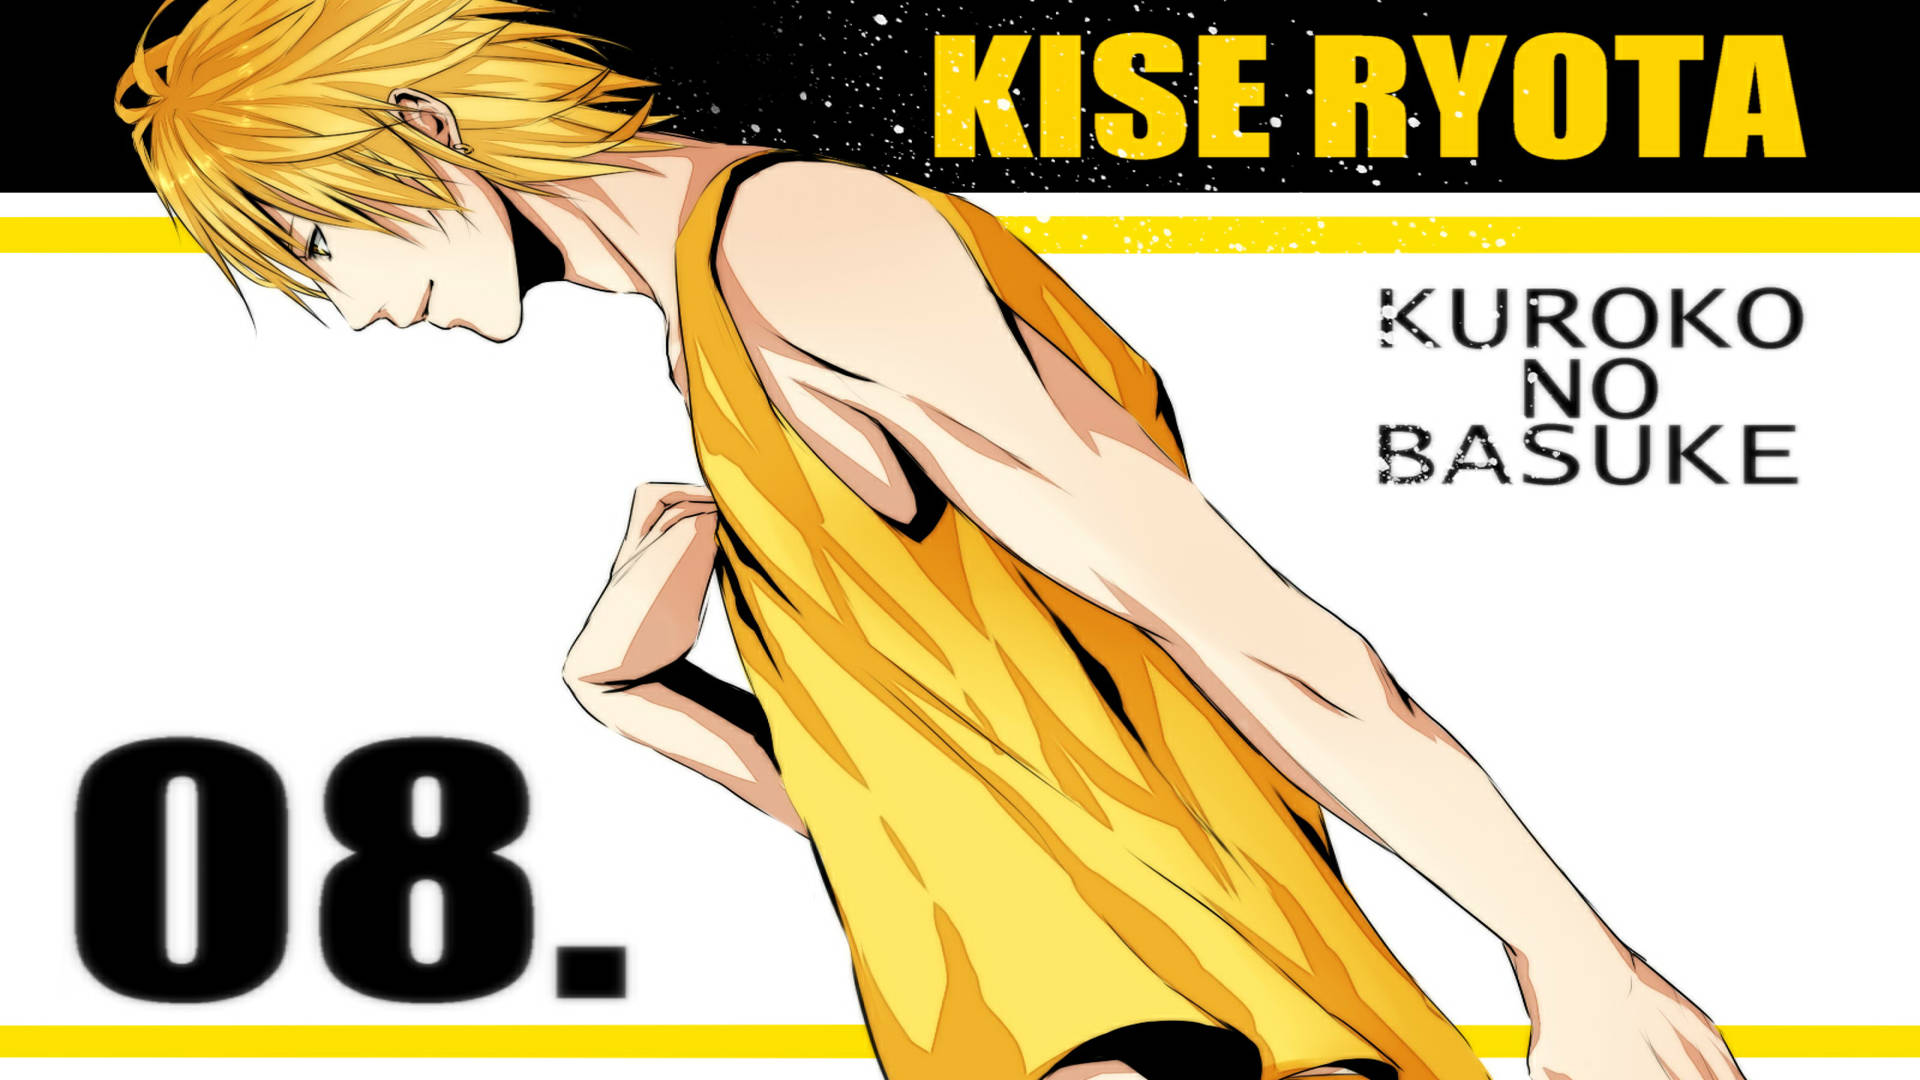 Kise Ryota Of Kuroko No Basket Background